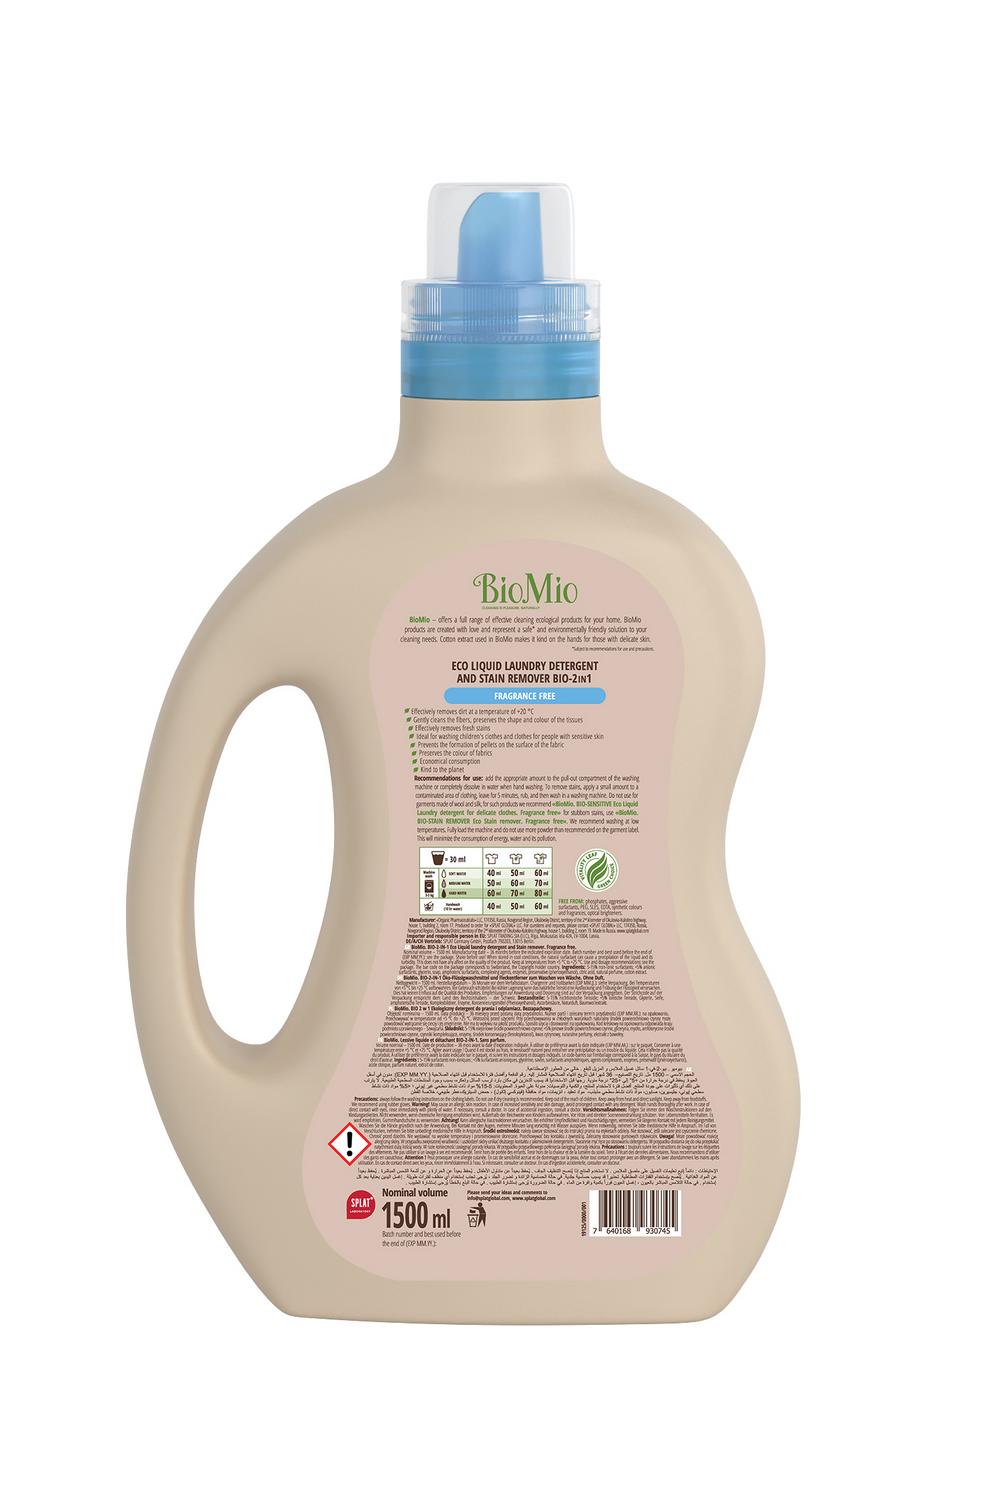 Detergente Lavadora Pieles Sensibles Ecomimidú Bio 1,5L - Ecocash